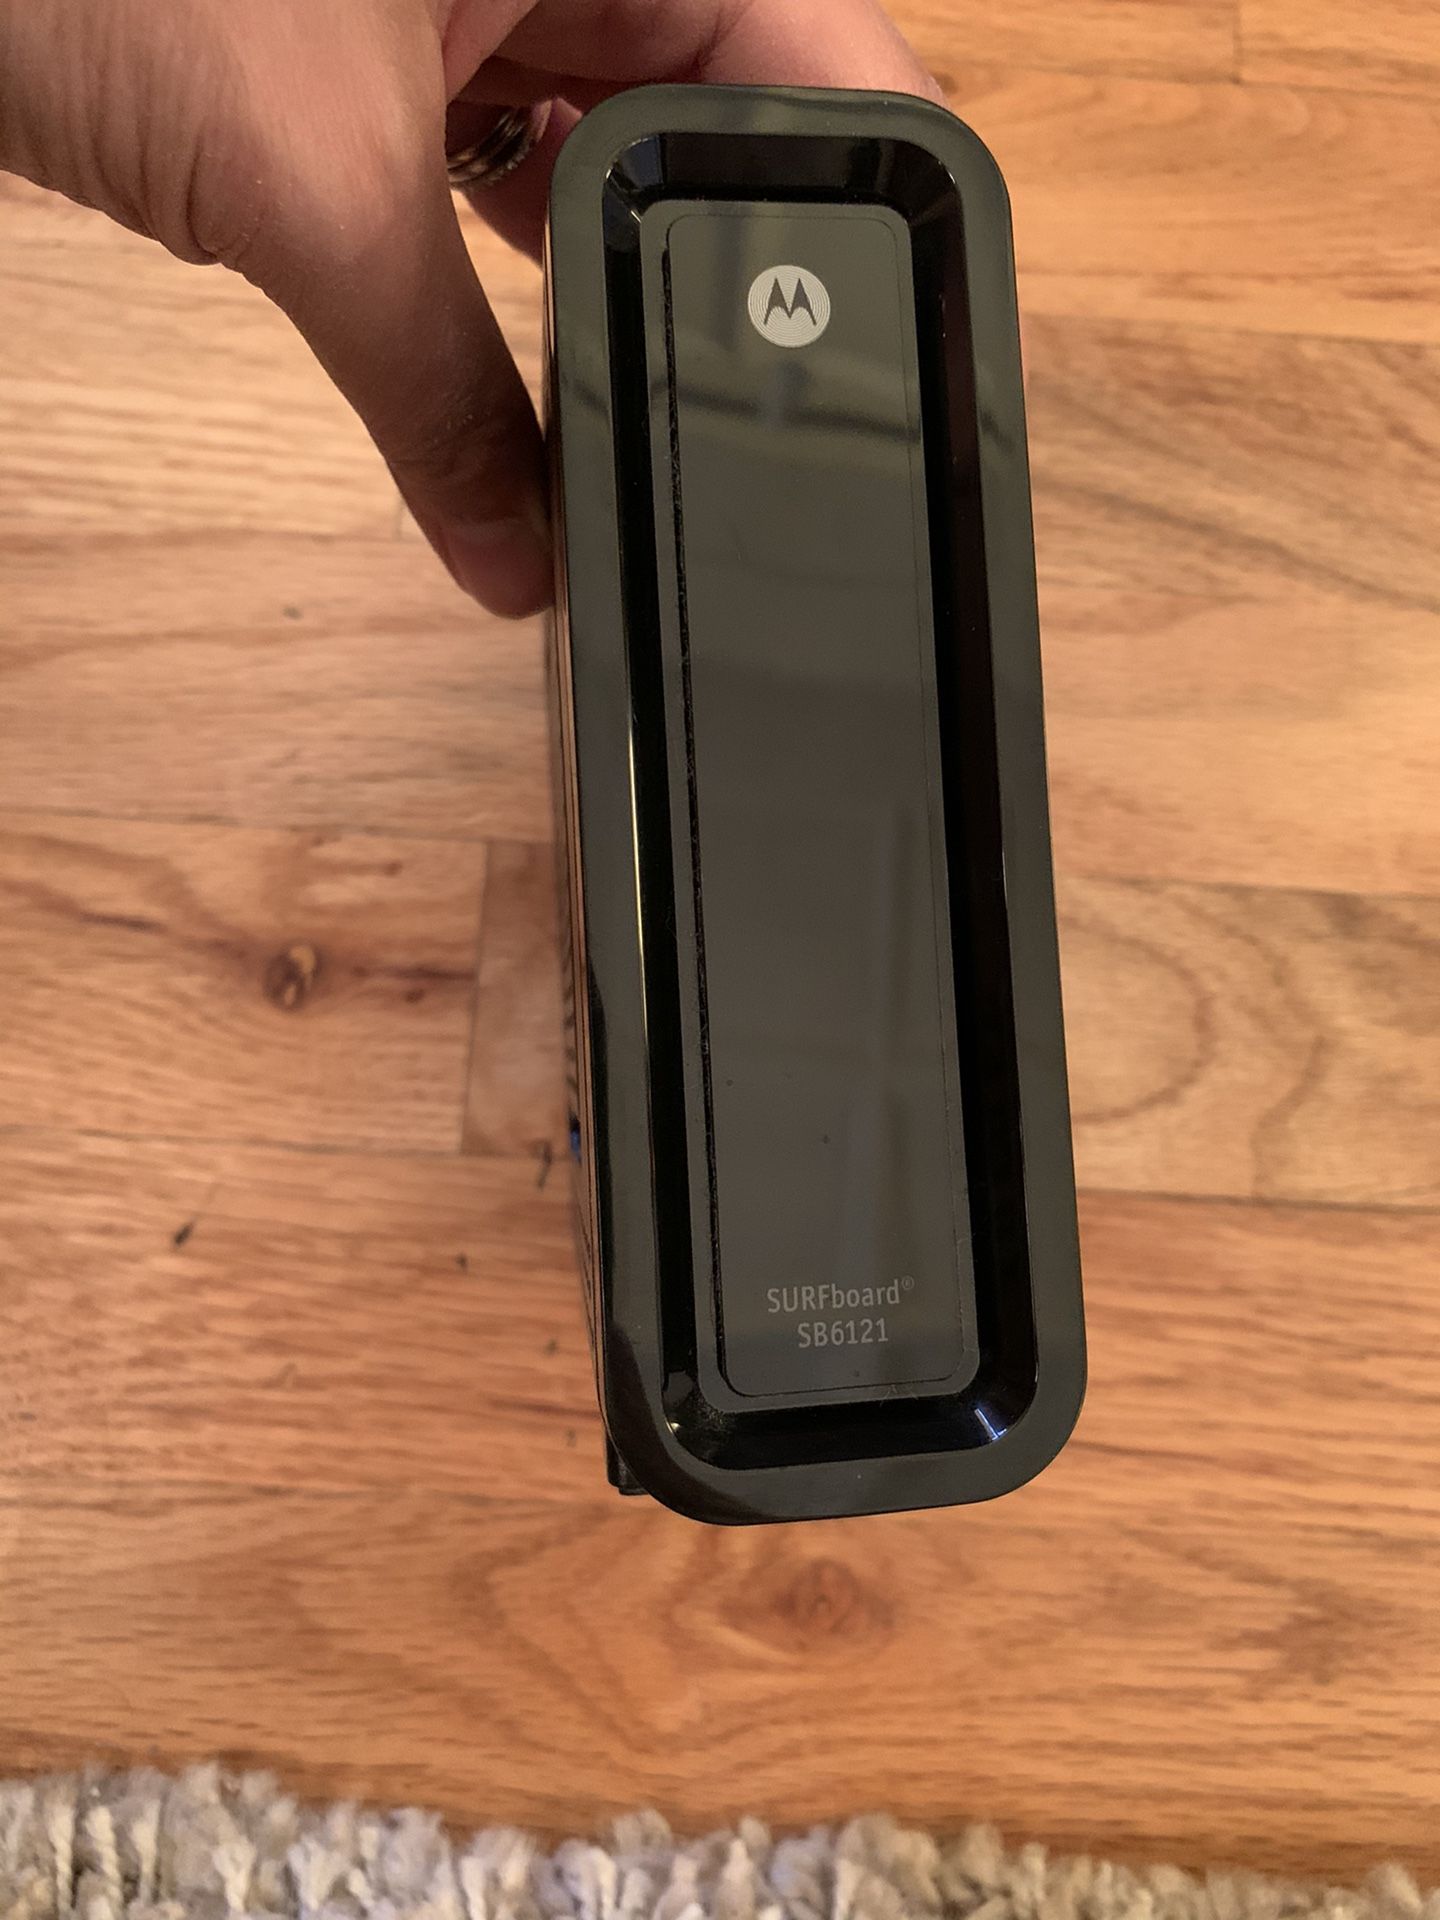 Motorola surf board modem